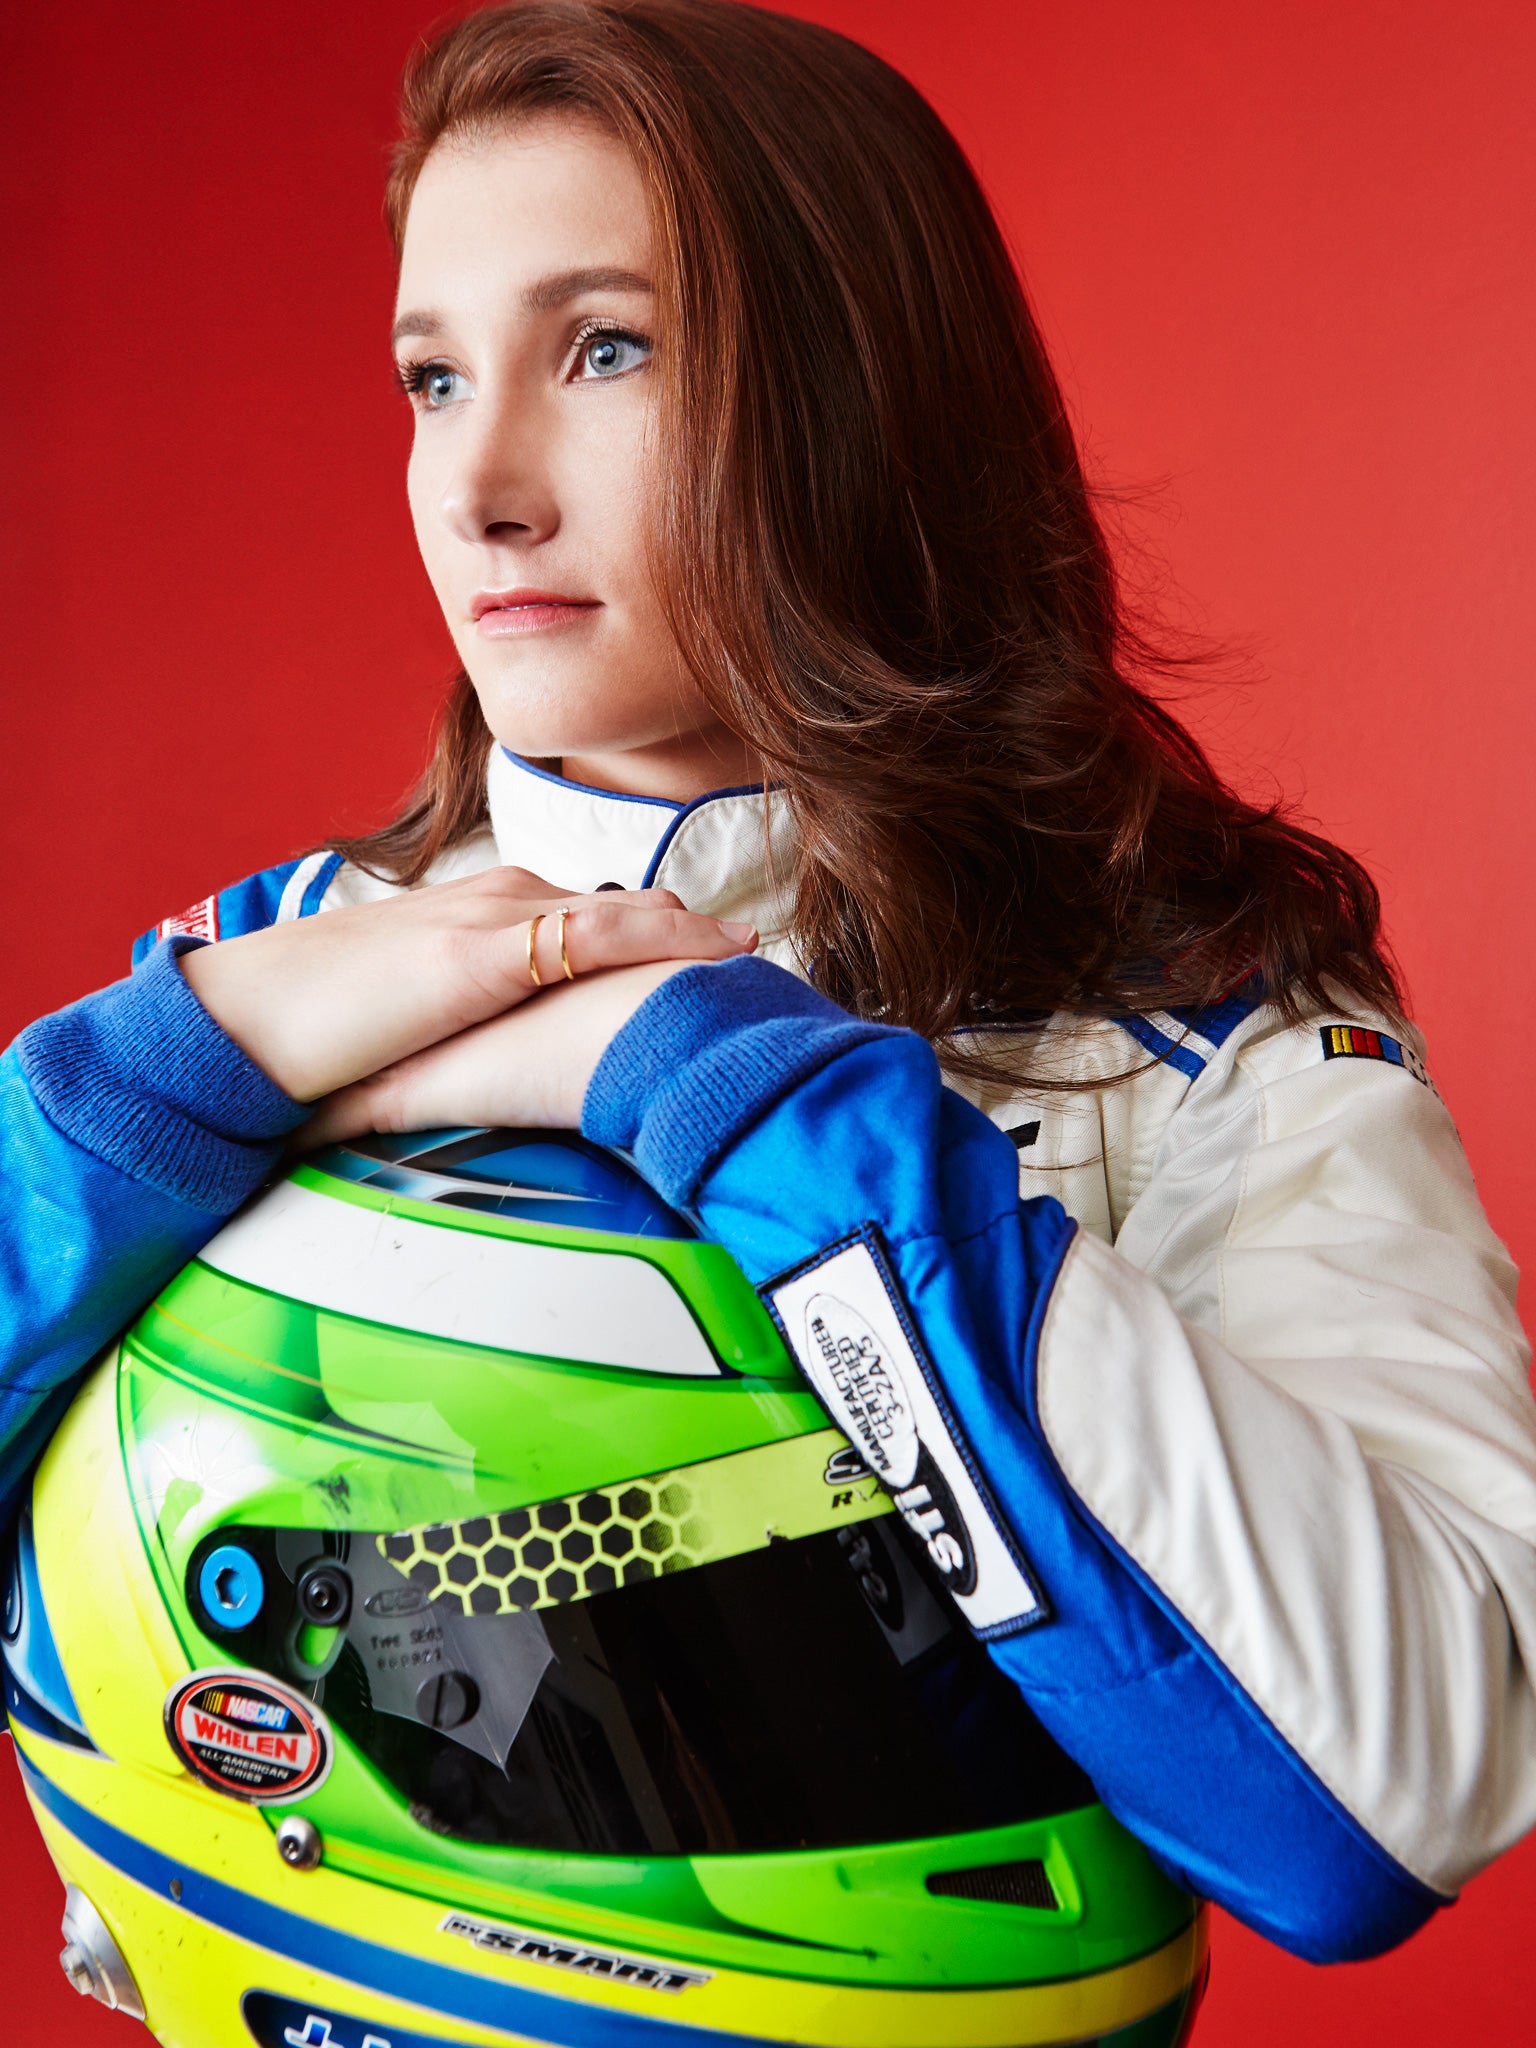 julia landauer NASCAR racer interview with shiffon co meaningful jewelry